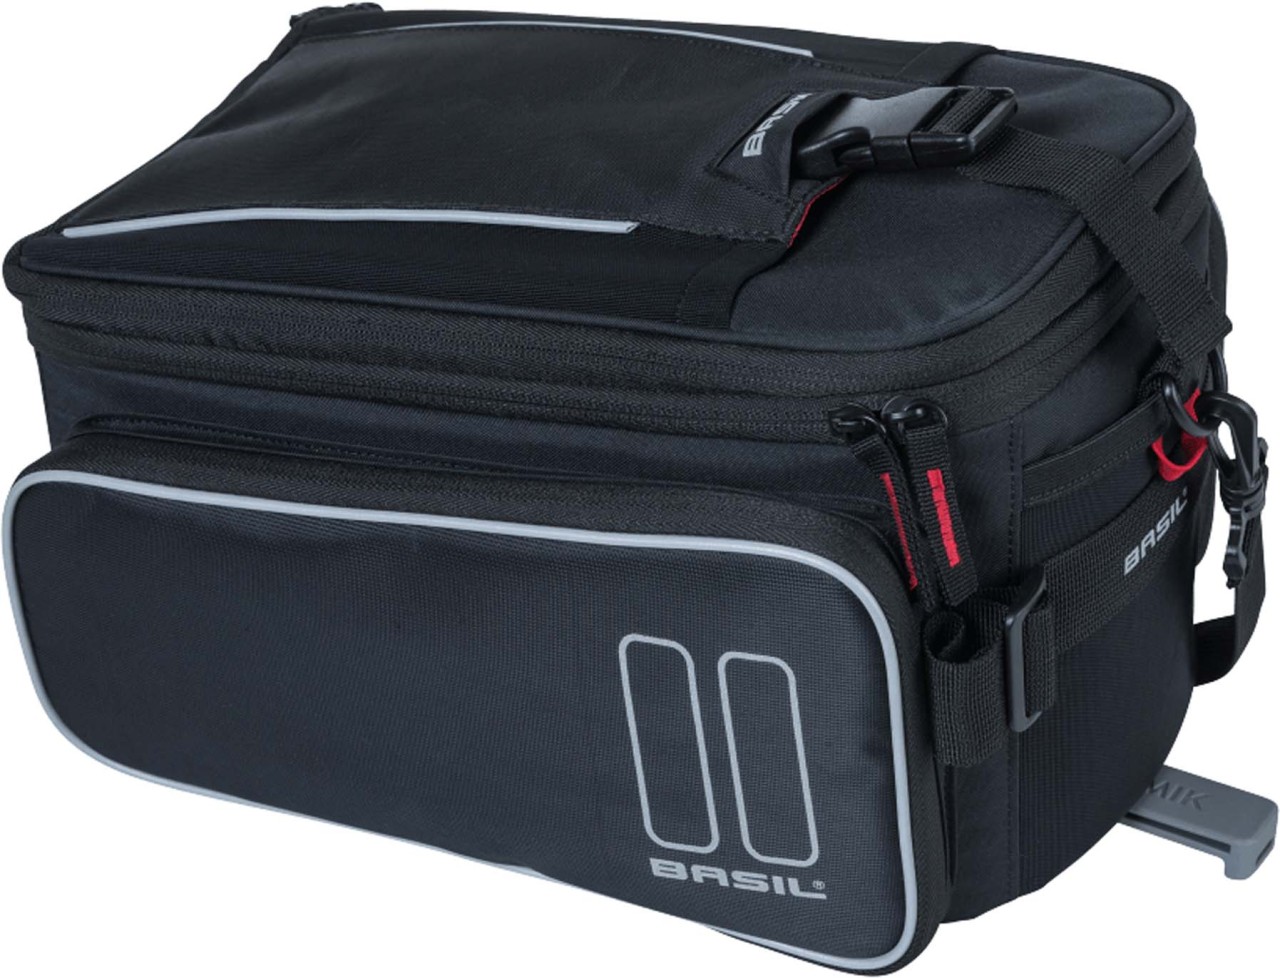 Basil Sport Design Trunkbag MIK, borsa da trasporto